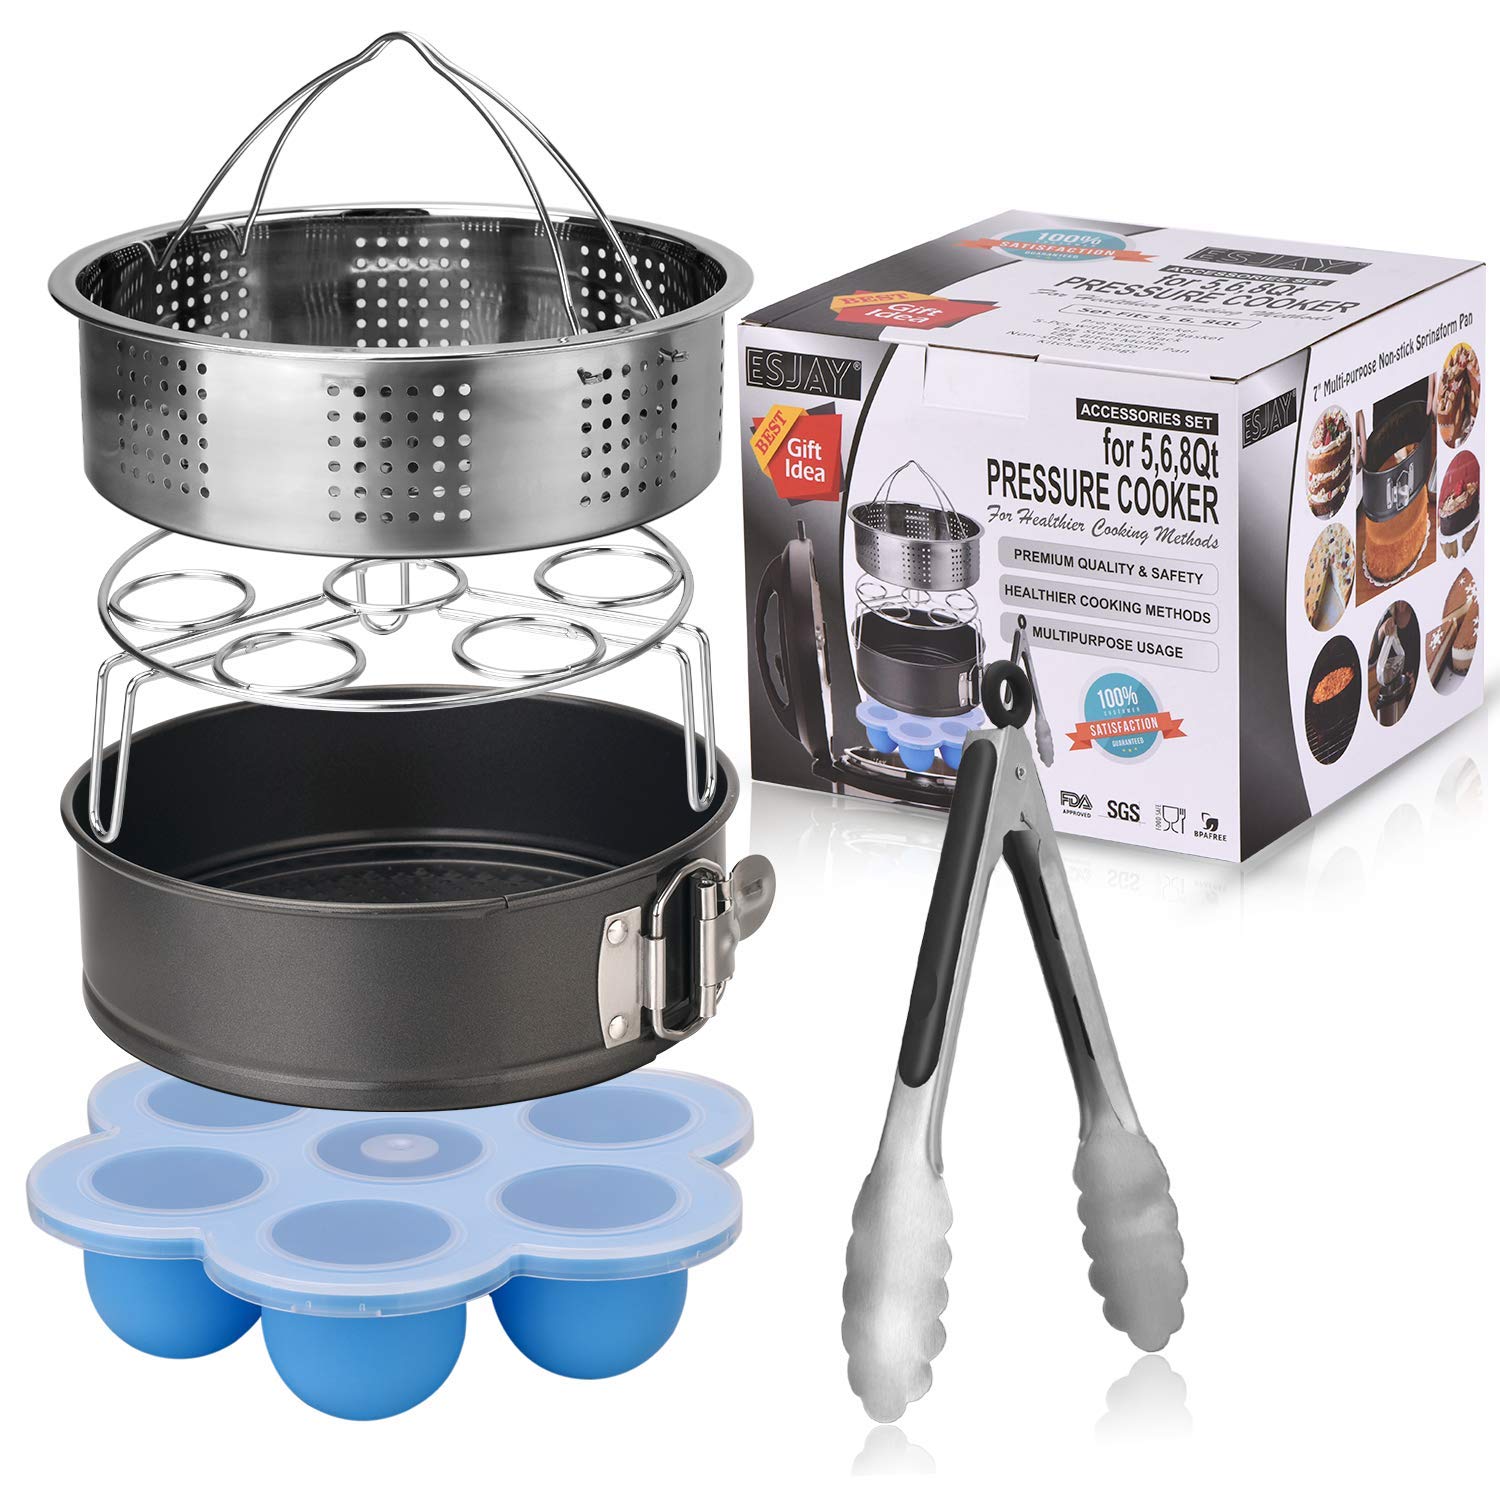 Esjay Accessories Set for Instant Pot-Fits 5,6,8Qt Instant pot Pressure Cooker,5-Pcs with Steamer Basket/Egg Steamer Rack/Egg Bites Molds/Non-stick Springform Pan/Kitchen Tongs,Best Gift Idea